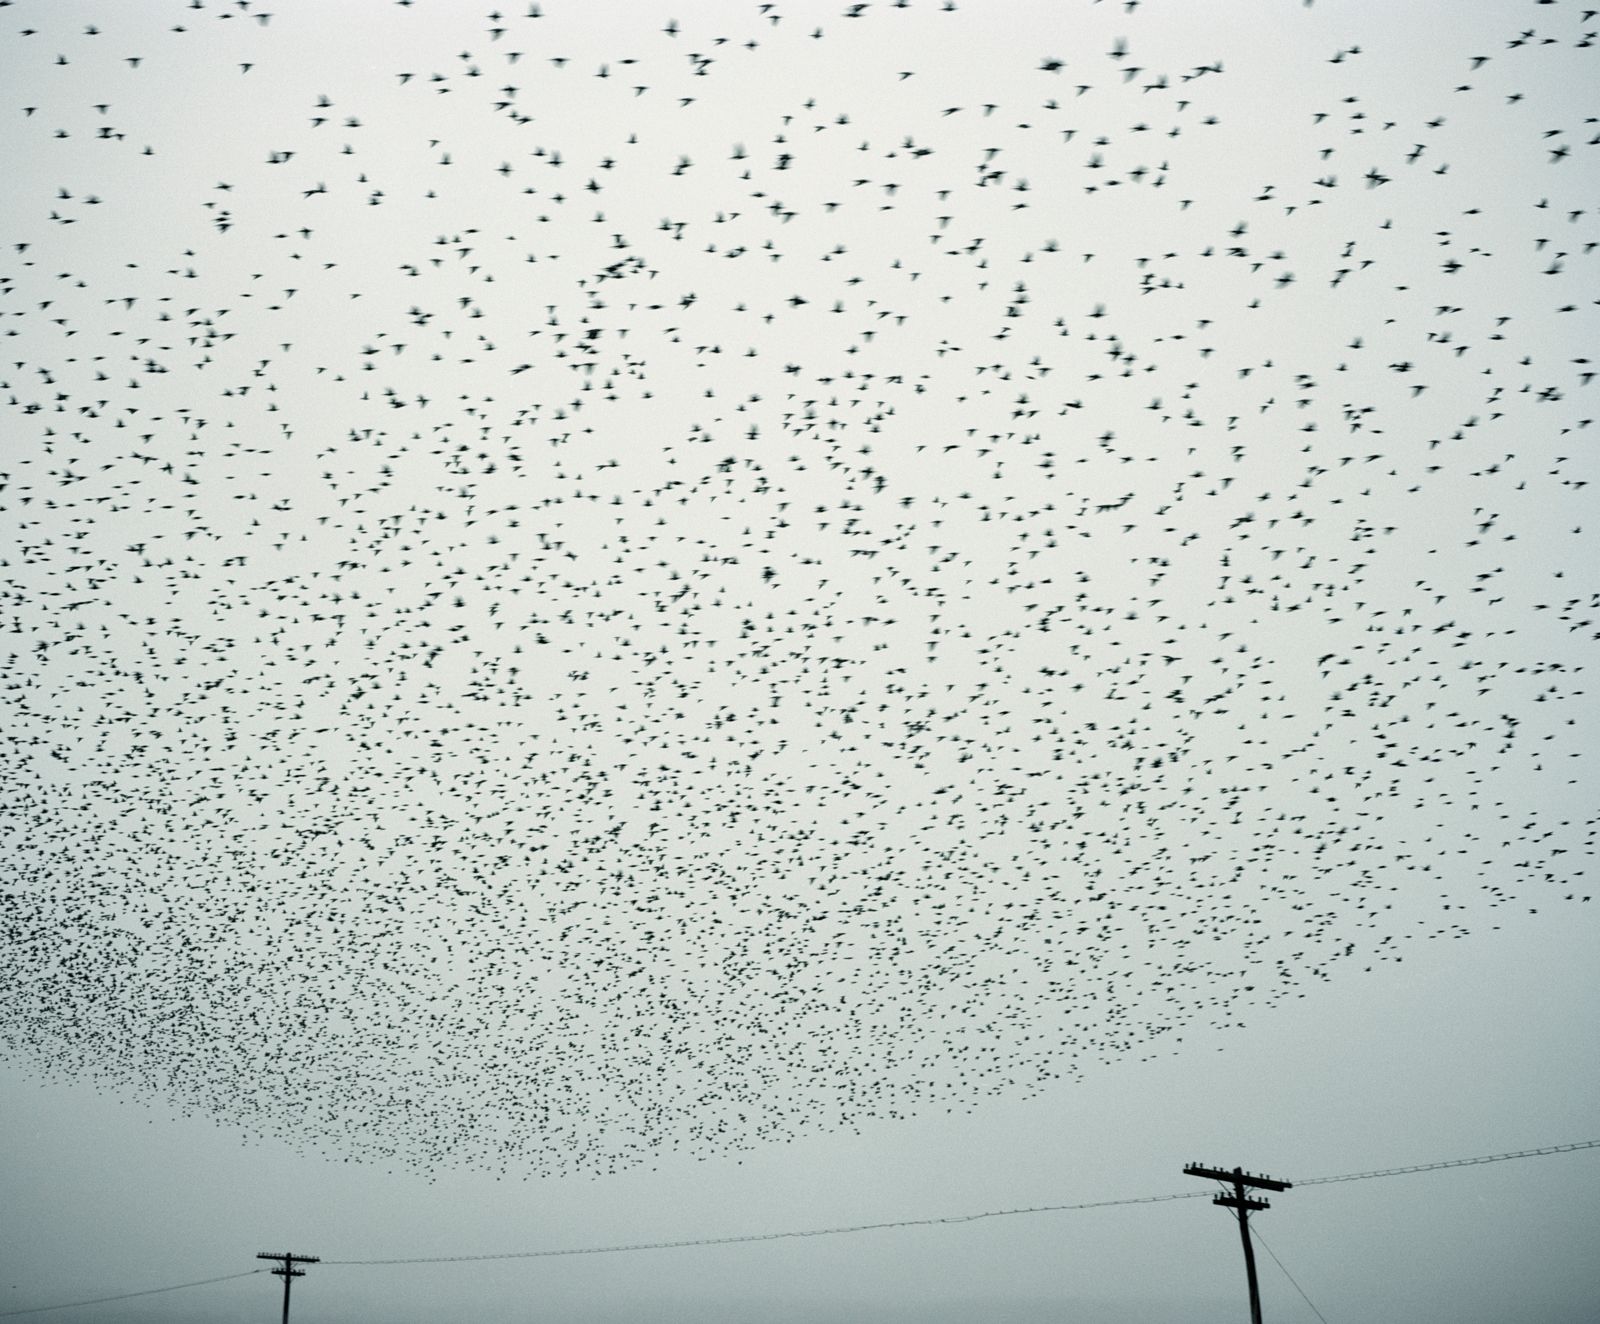 © Tommaso Rada - Romania, Tulcea. Birds fly on a field